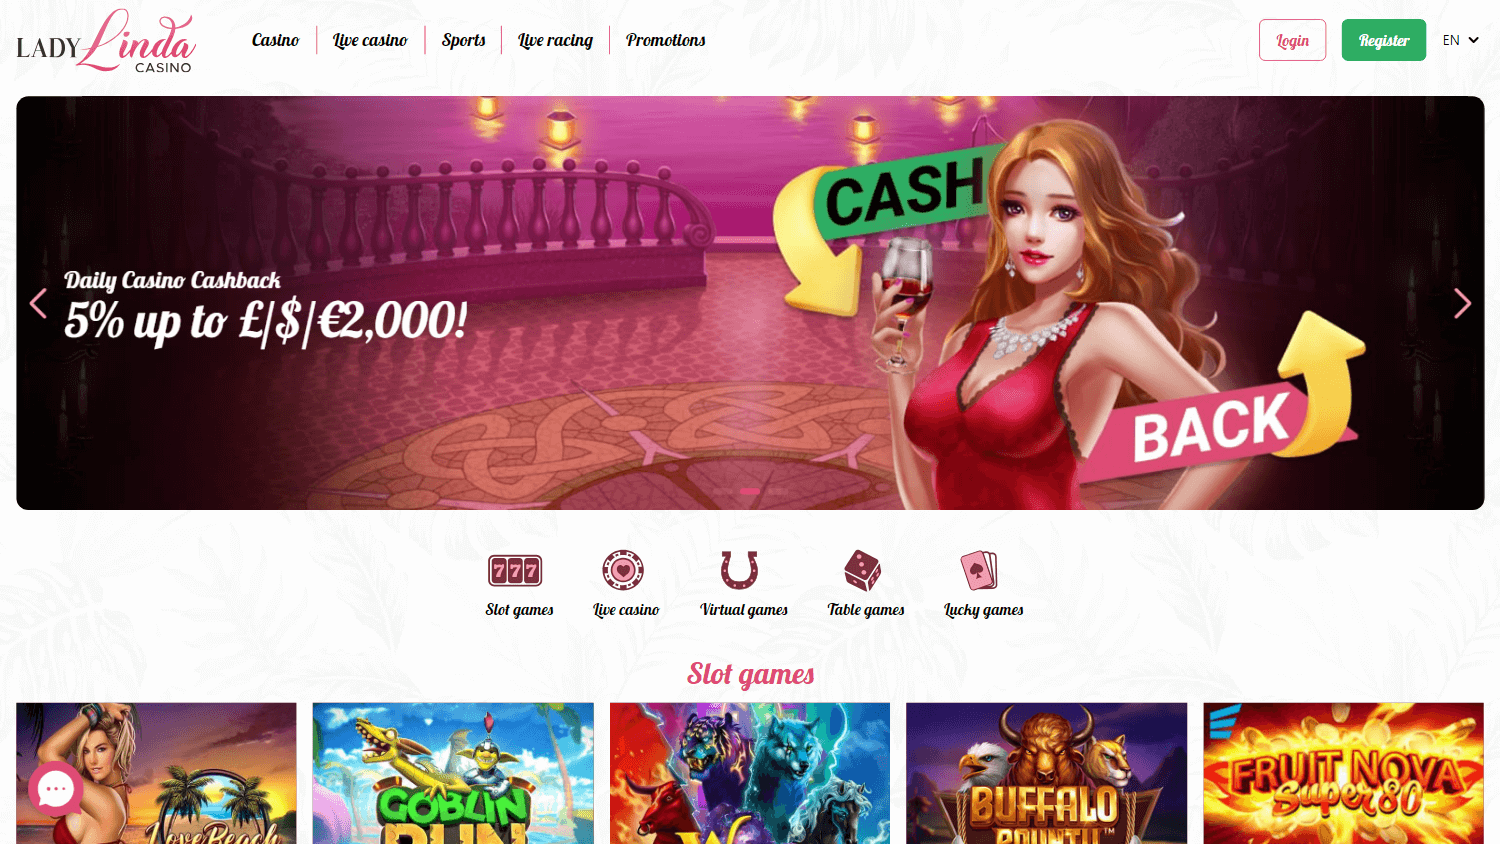 lady_linda_casino_homepage_desktop